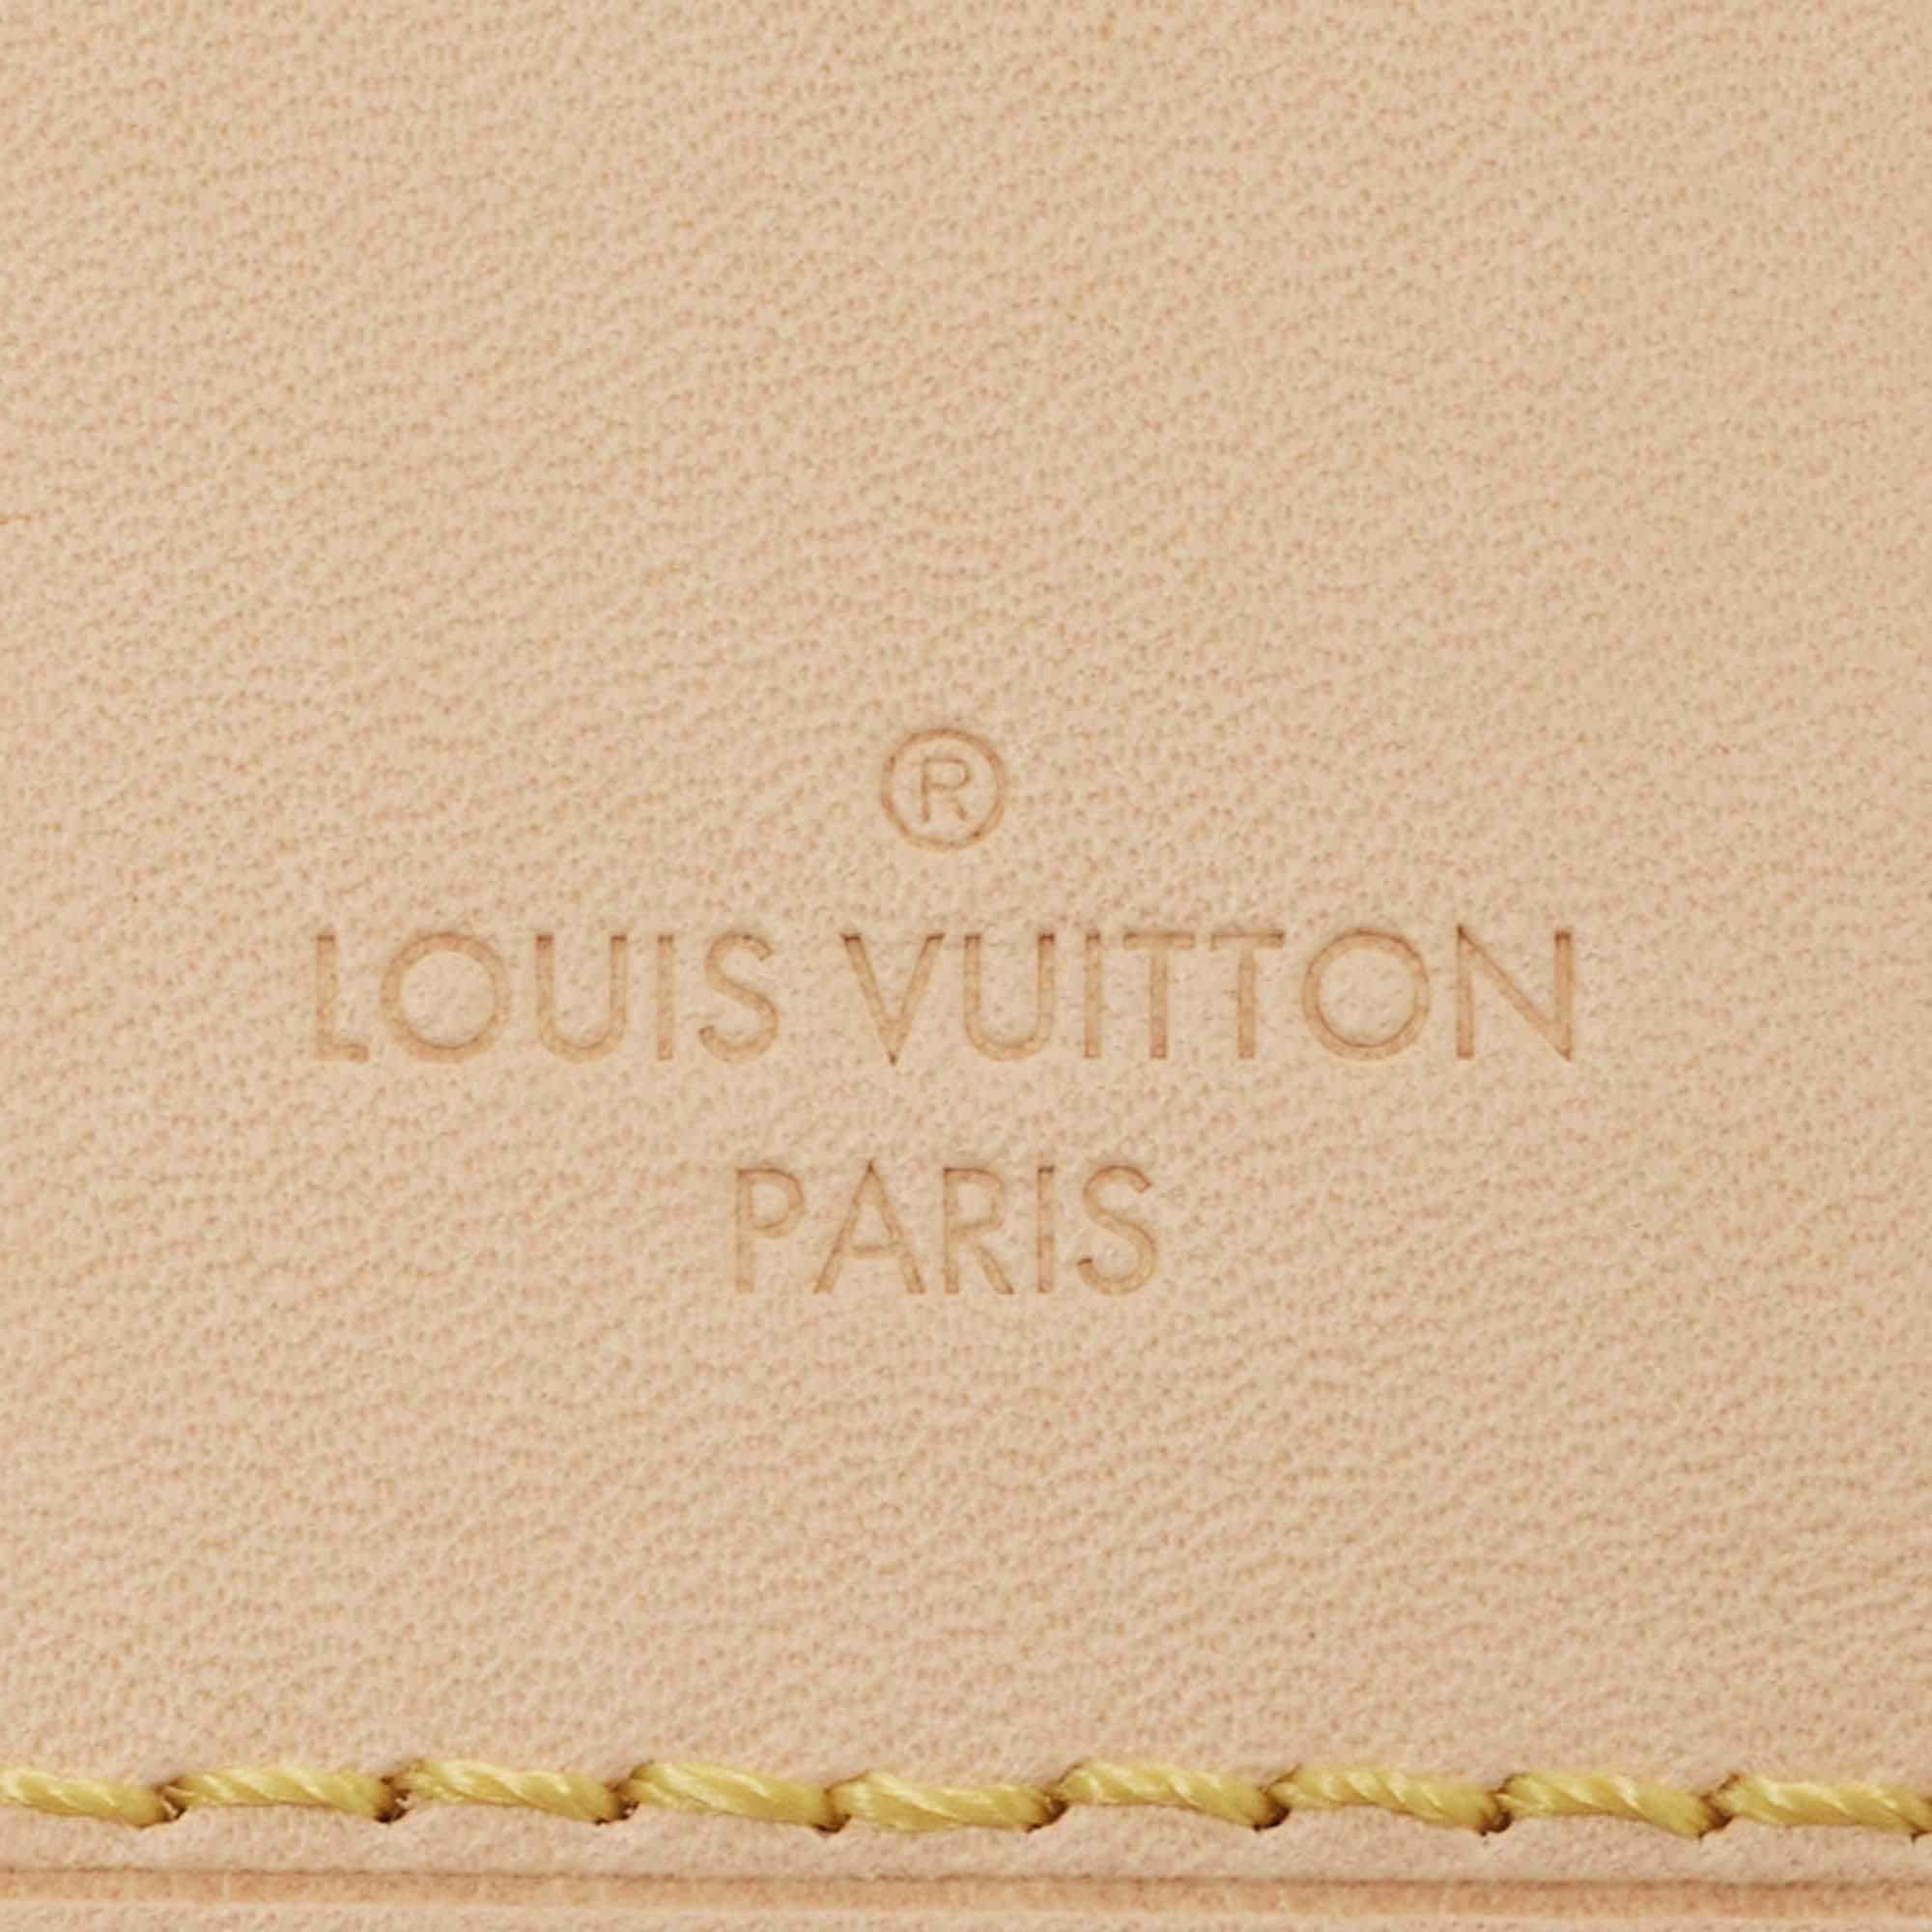 Louis Vuitton Vachetta Leather Luggage ID Tag Name Tag 10479 